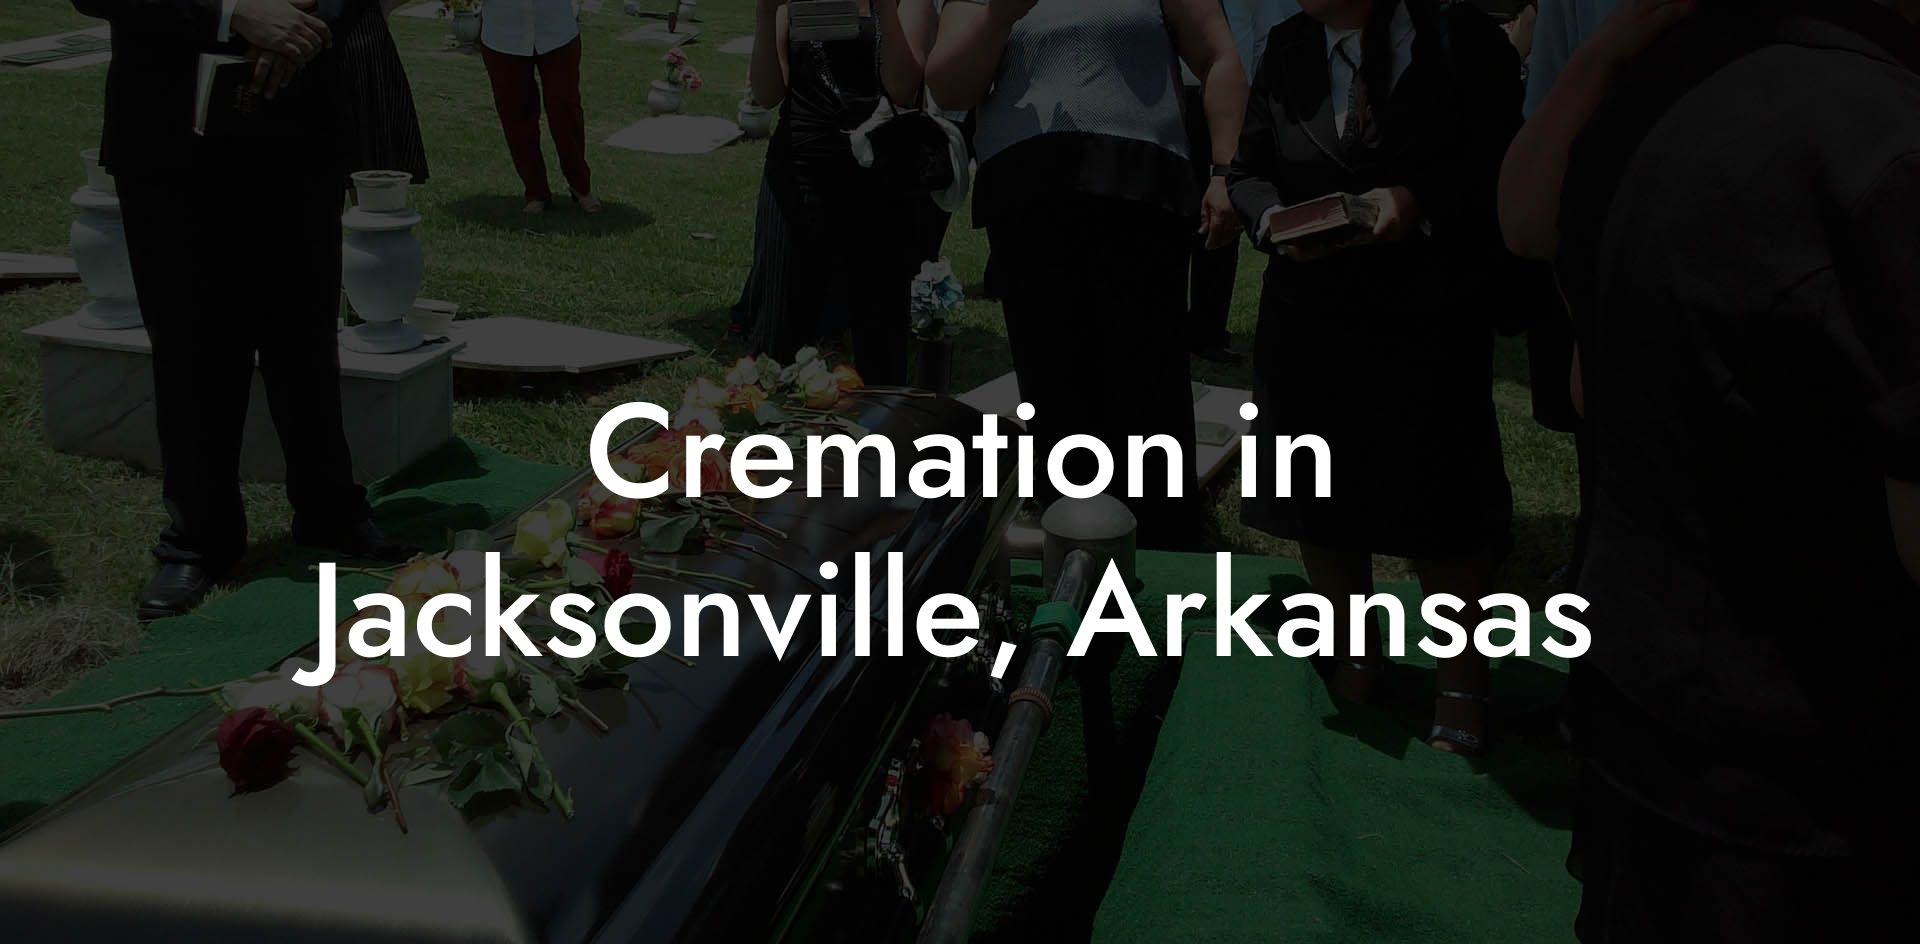 Cremation in Jacksonville, Arkansas